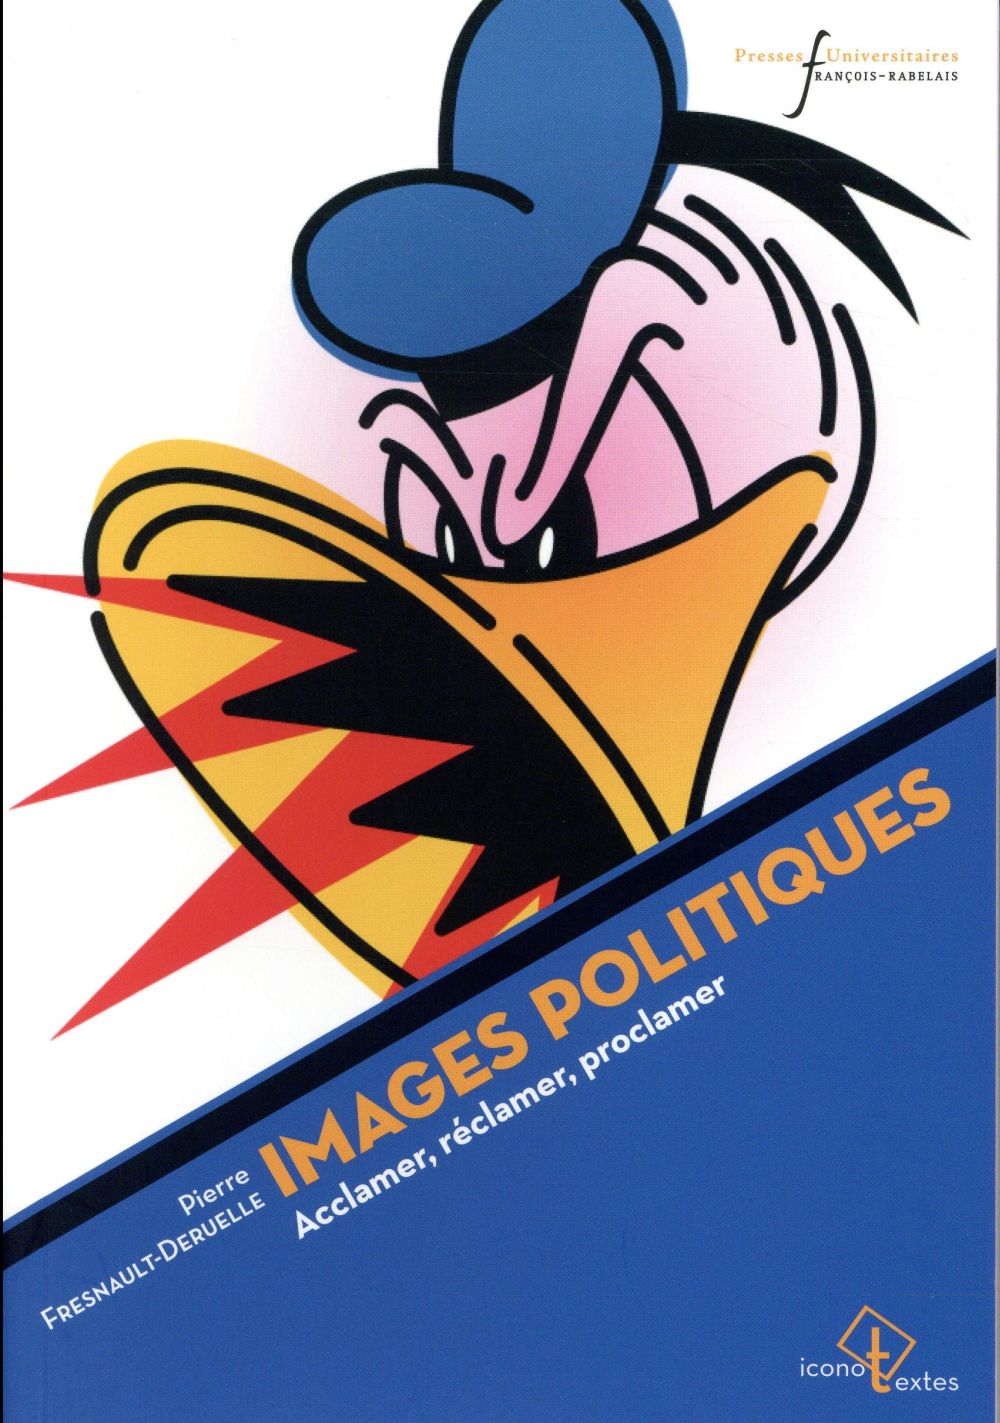 IMAGES POLITIQUES - ACCLAMER, RECLAMER, PROCLAMER